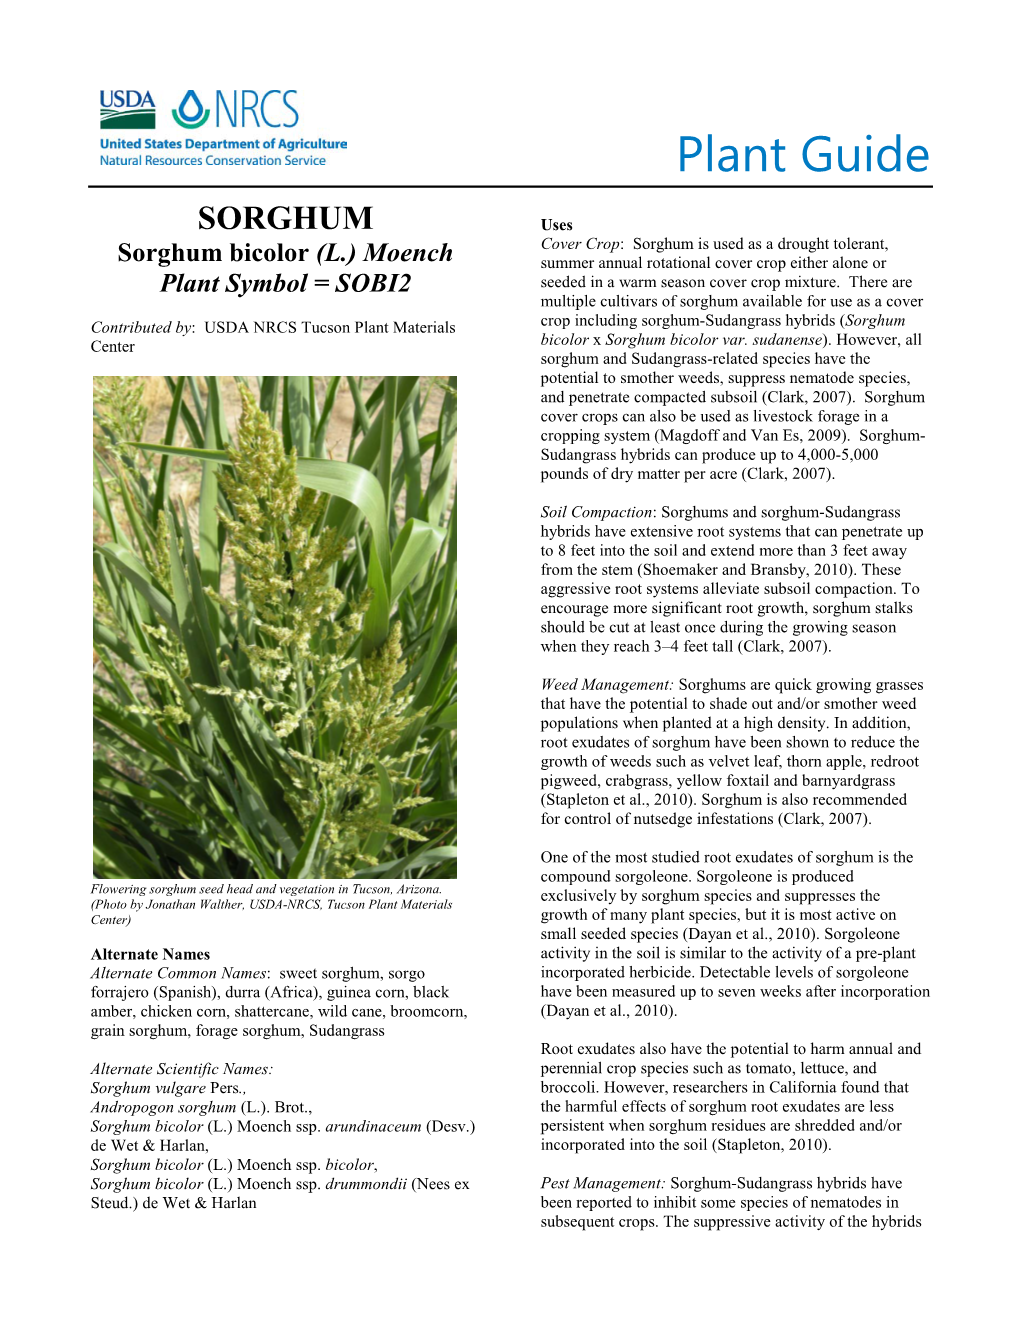 Plant Guide: Sorghum (Sorghum Bicolor)